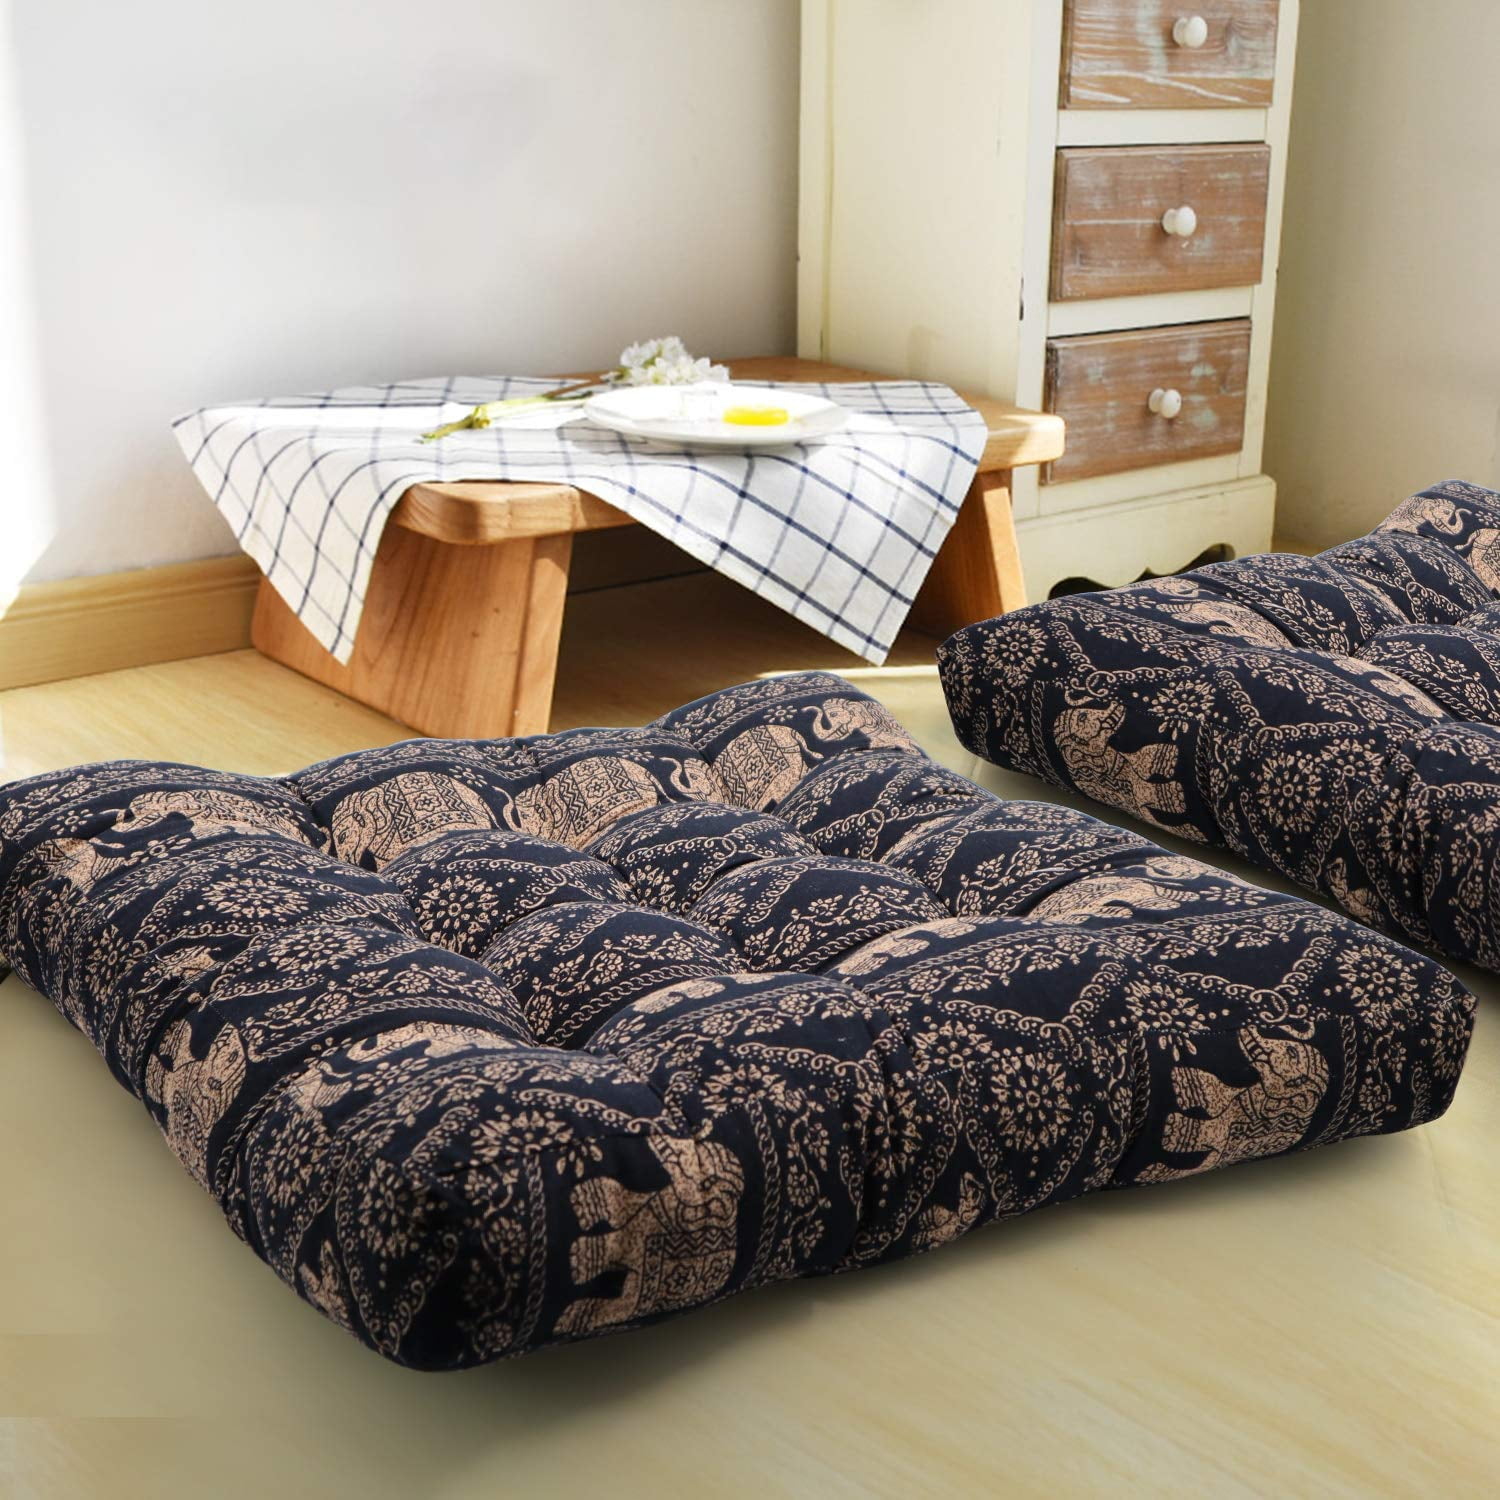 Boho Round Floor Seat Pillows Cushions 22 x 22, Soft Cotton Linen  Bohemian Yoga Mandala Meditation Pouf Tatami Floor Pillow Cushion for  Living Room